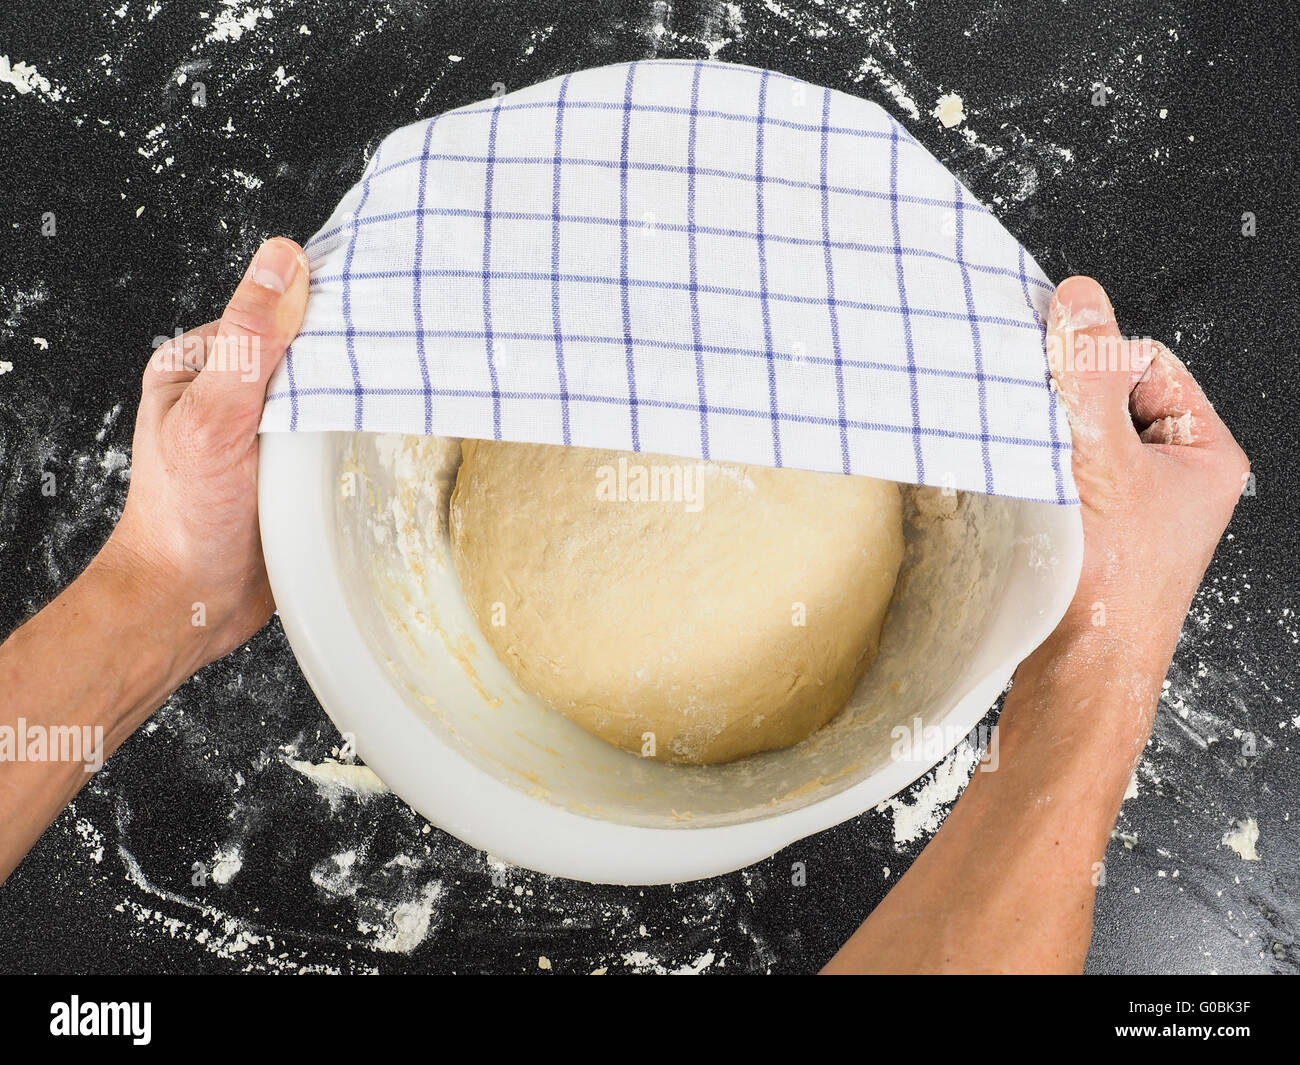 Proofing dough under towel Stock Photo